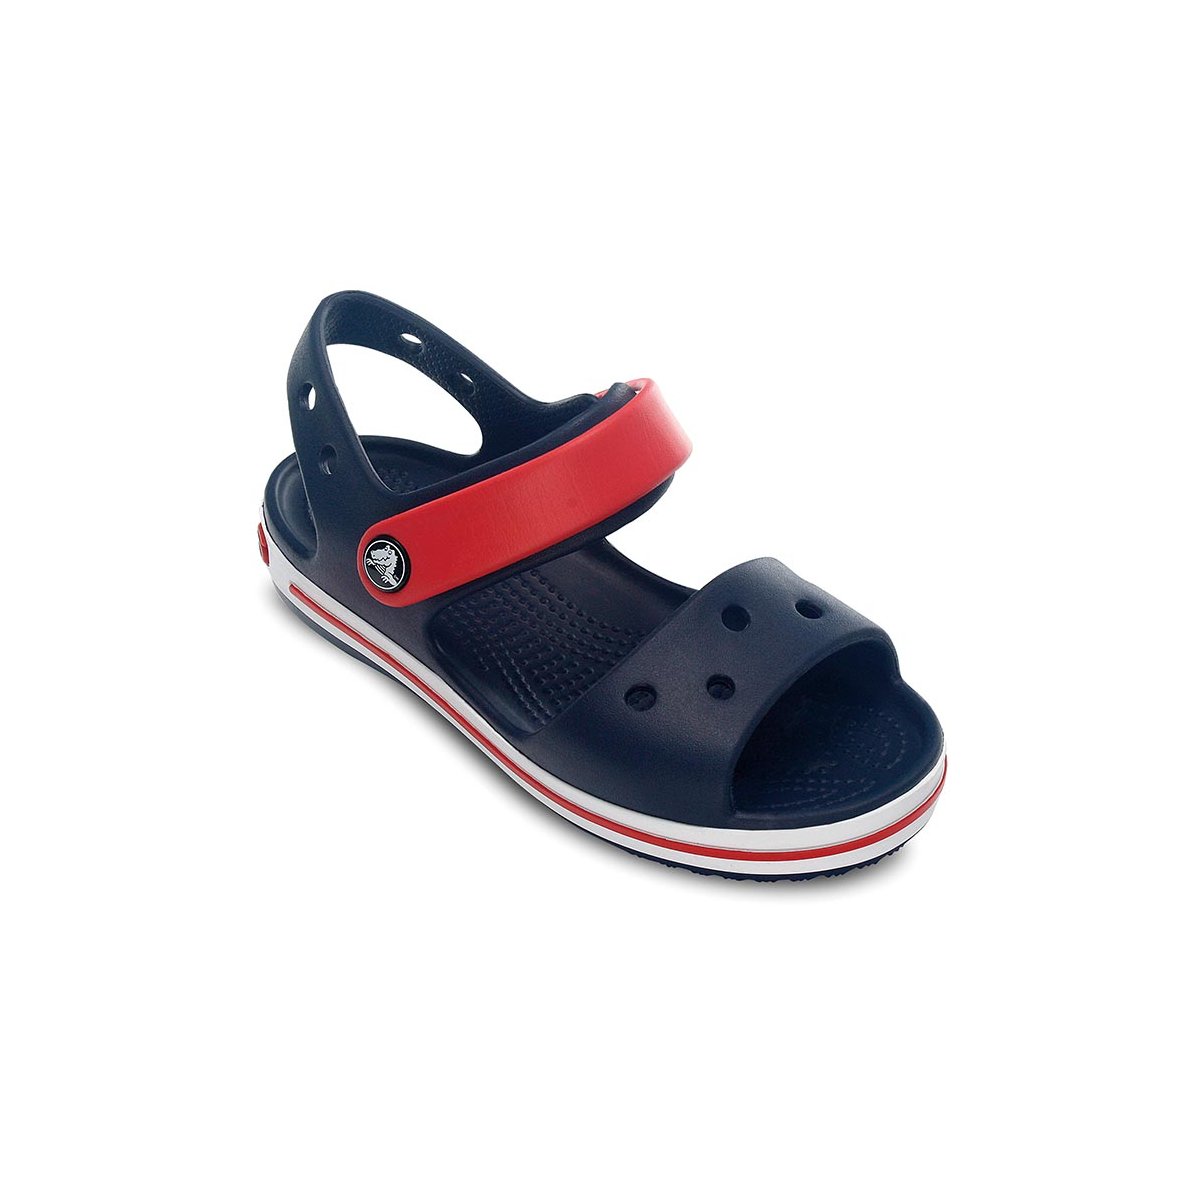 Crocband Sandal Kids Navy/Red CROCS 12856-485